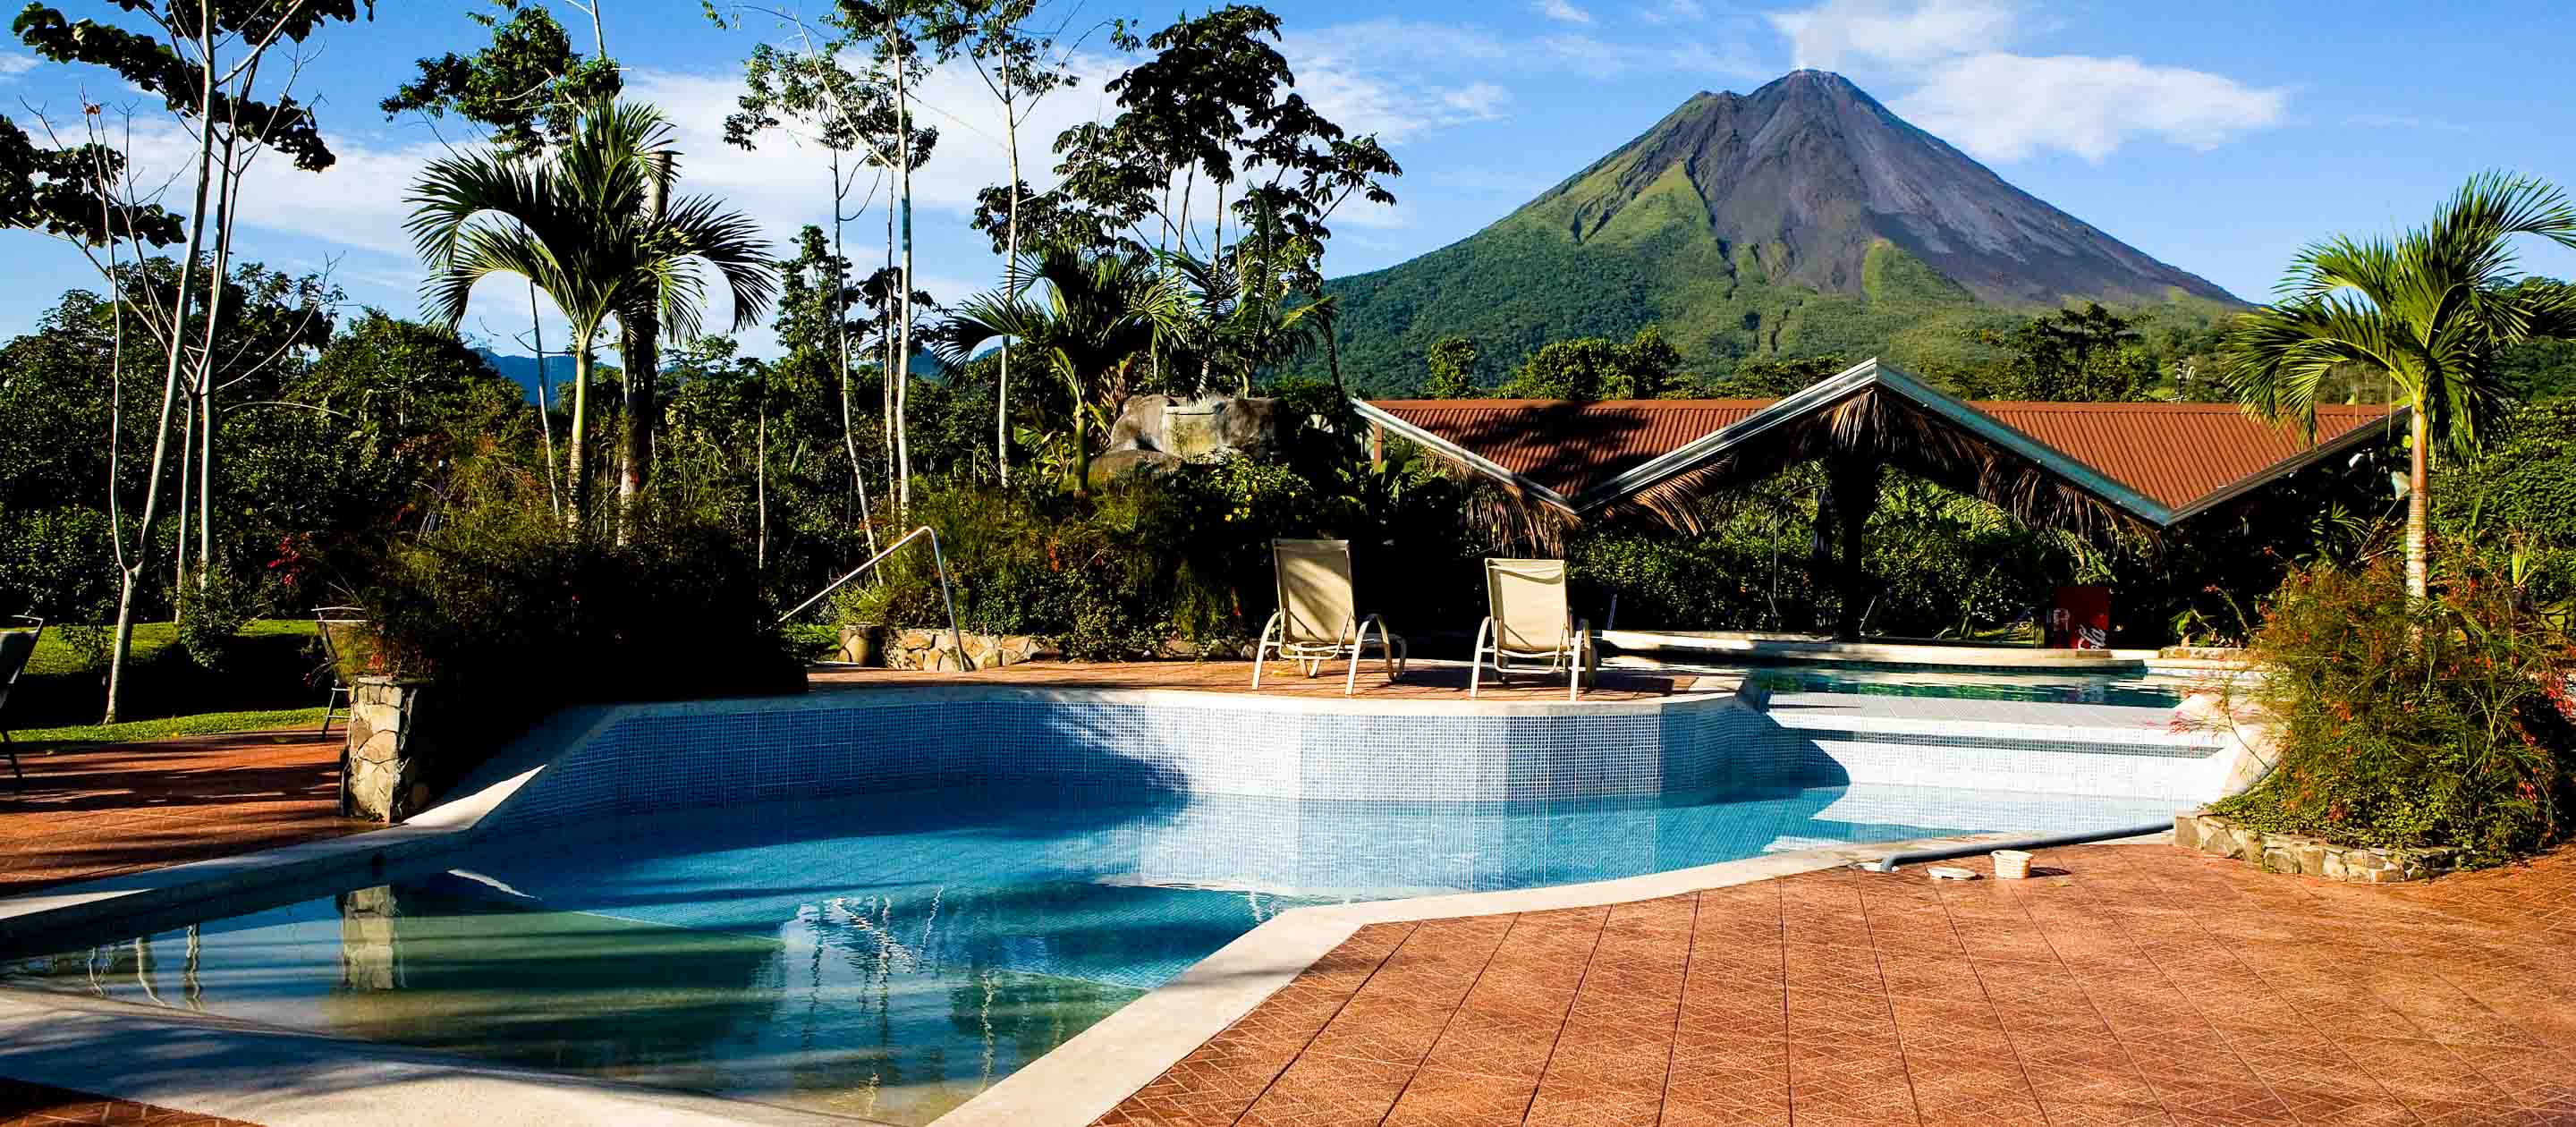 Resort pool in Costa Rica